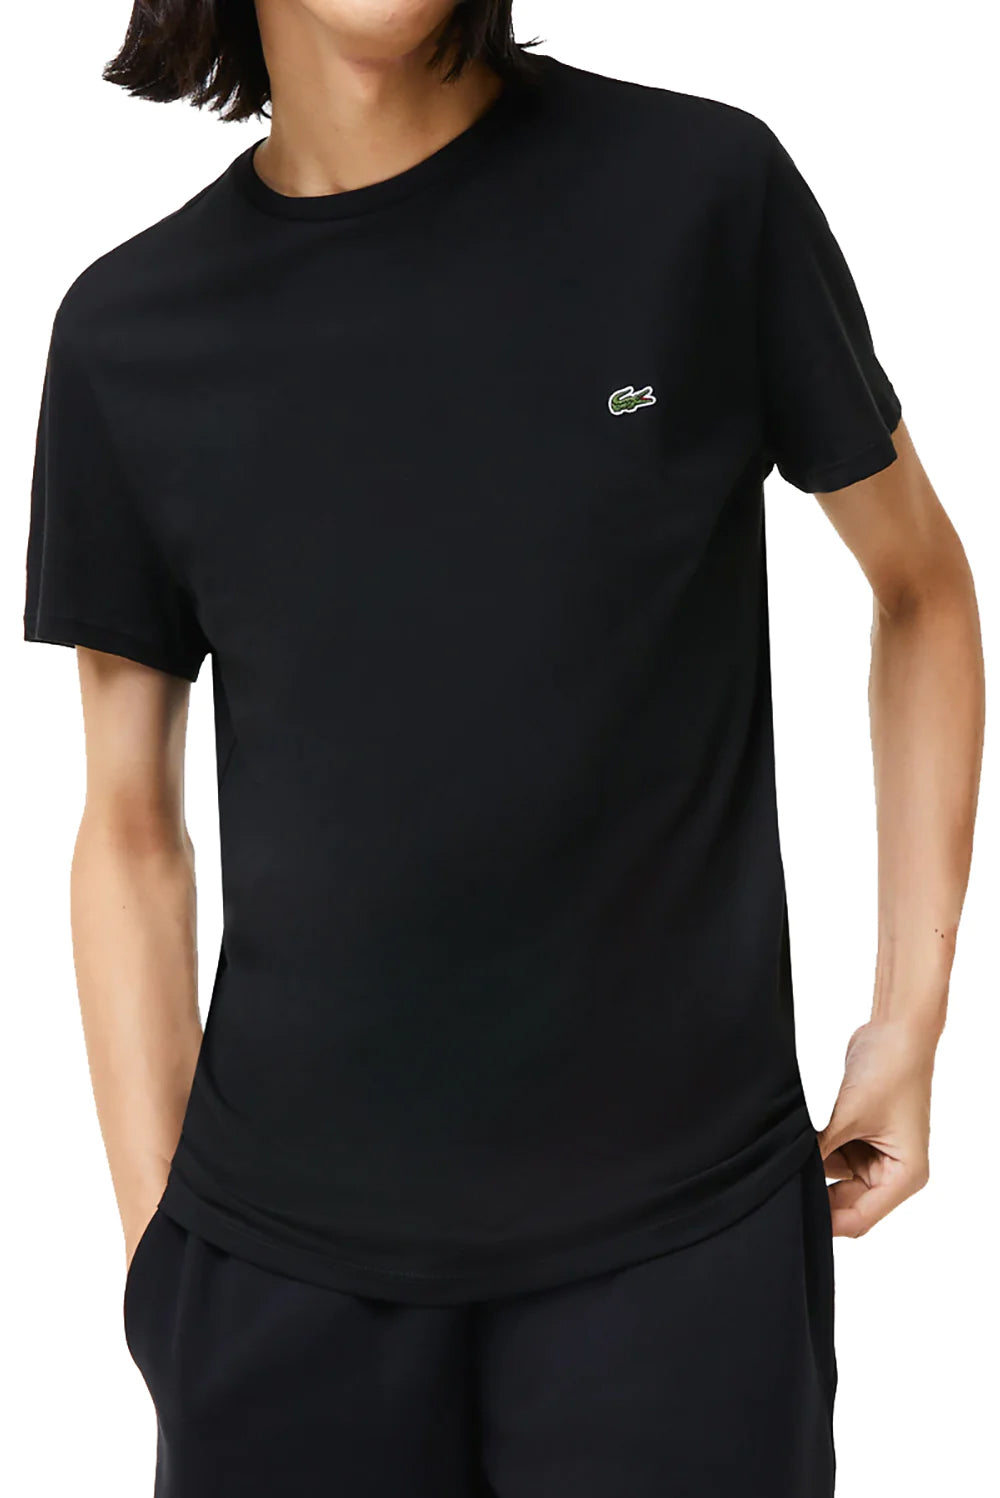  Lacoste T-shirt Classic Nero Uomo - 2